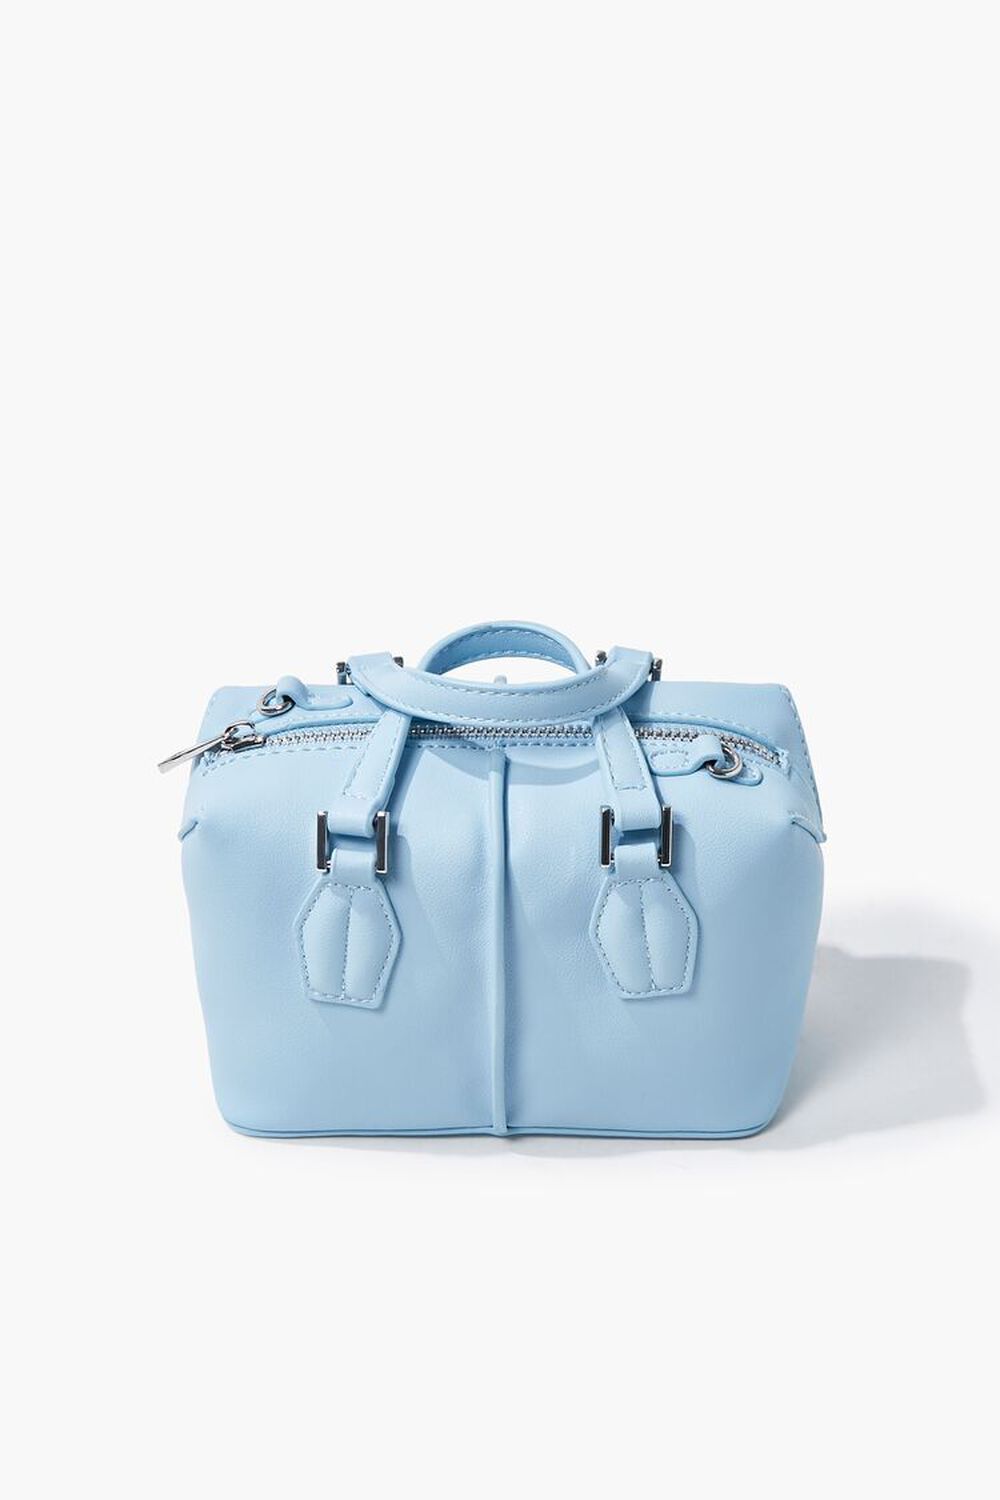 BLUE Top Handle Crossbody Bag, image 1